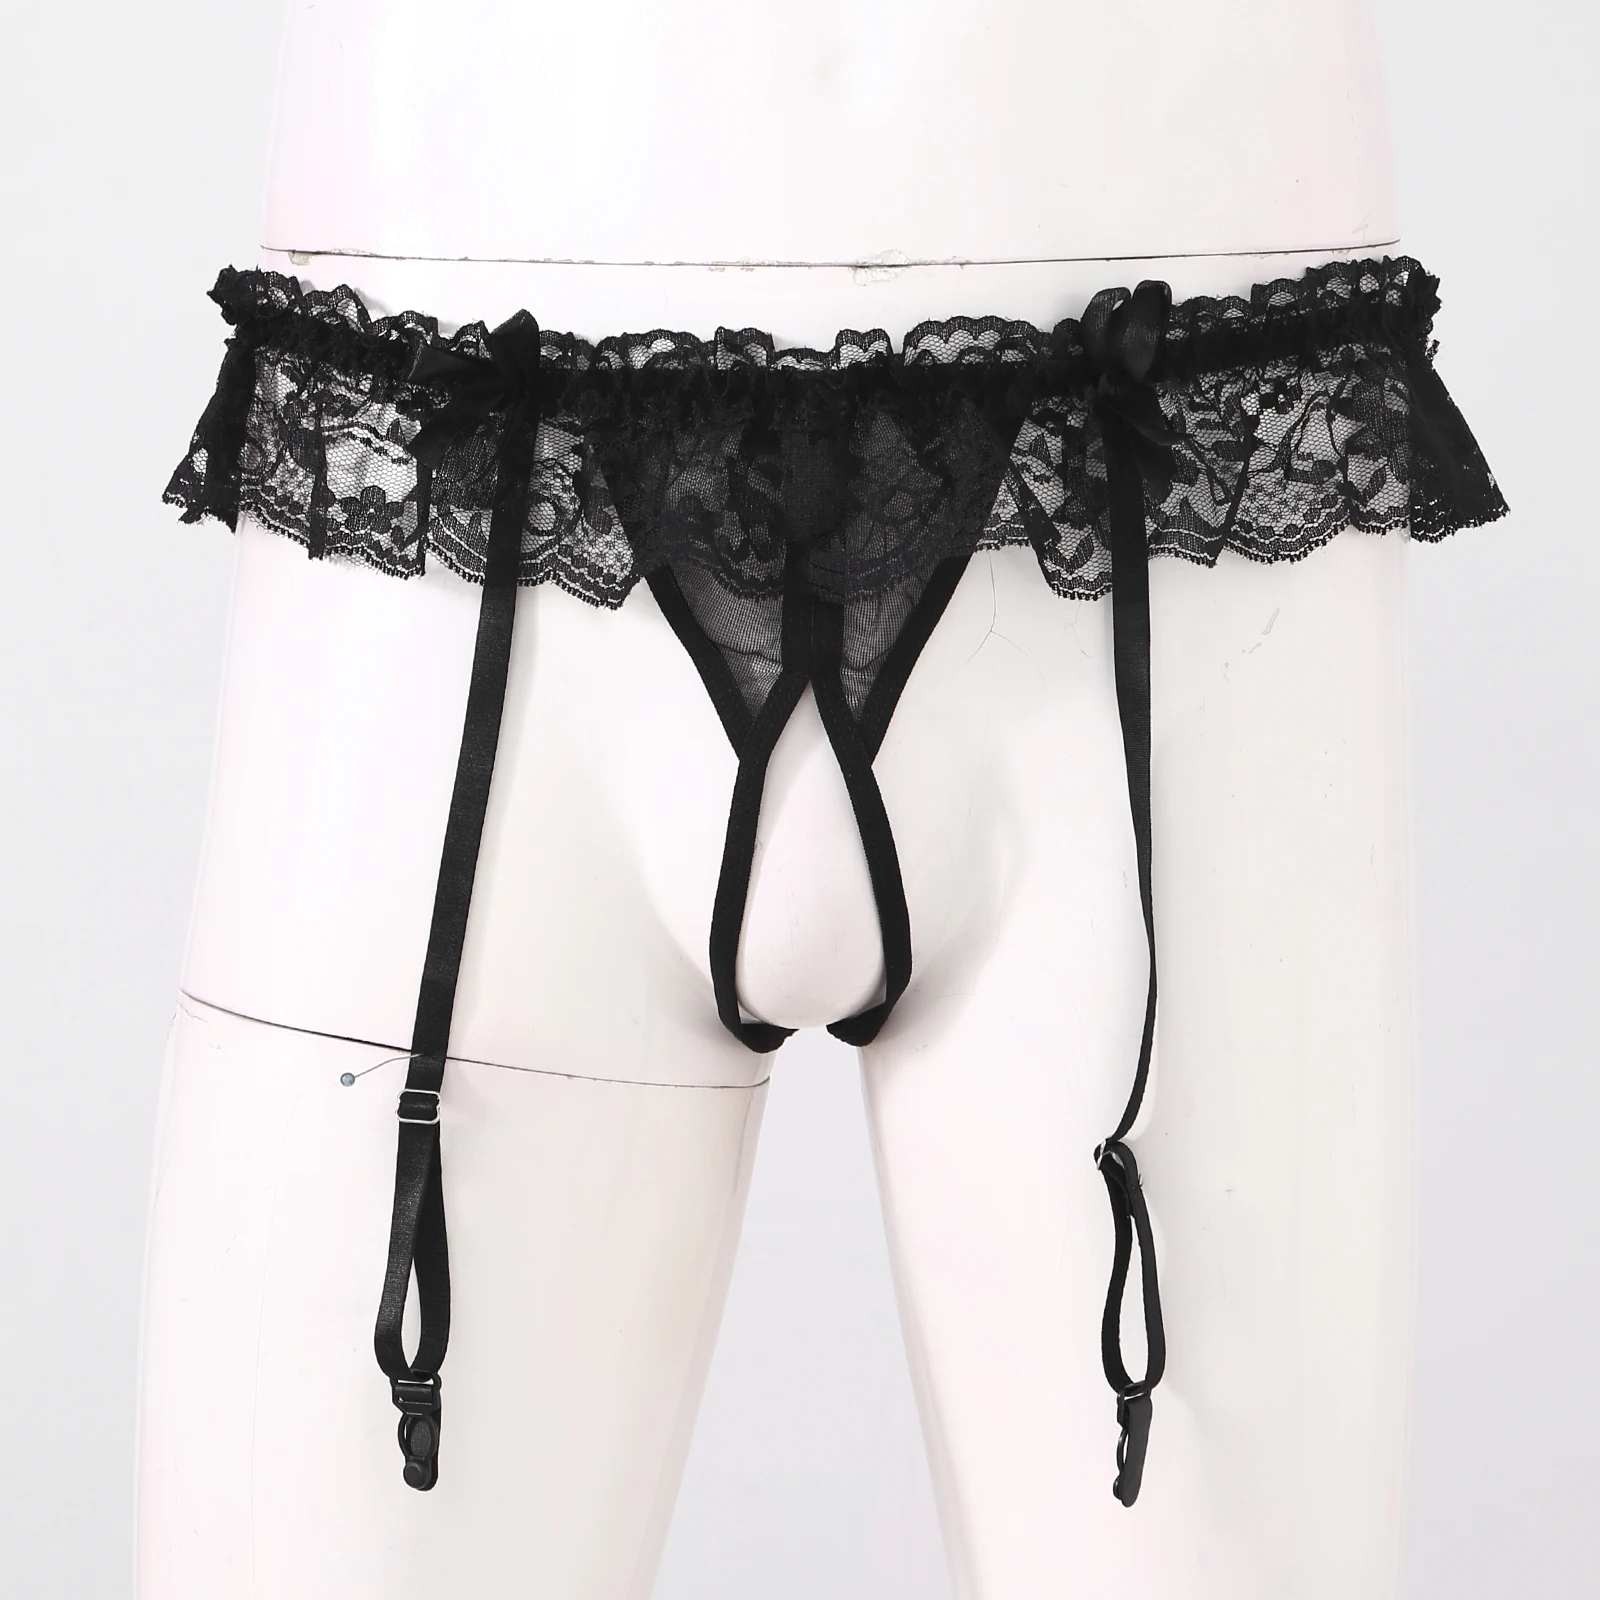 Lnxia Mens Sissy Lace Trim Underpants Mesh Underwear Transparent Jockstrap G-String Lingerie with Garter